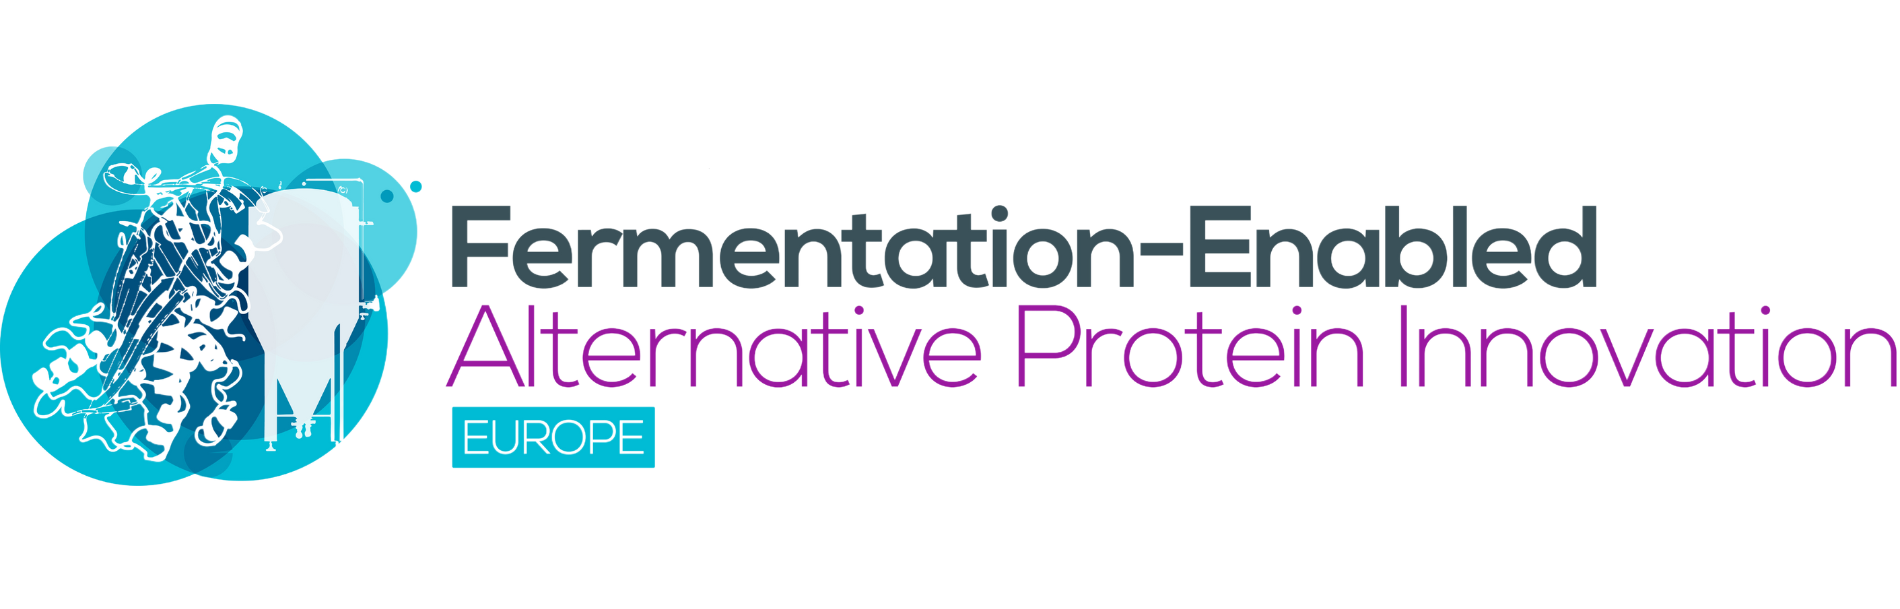 Fermentation-Enabled Alternative Protein Europe